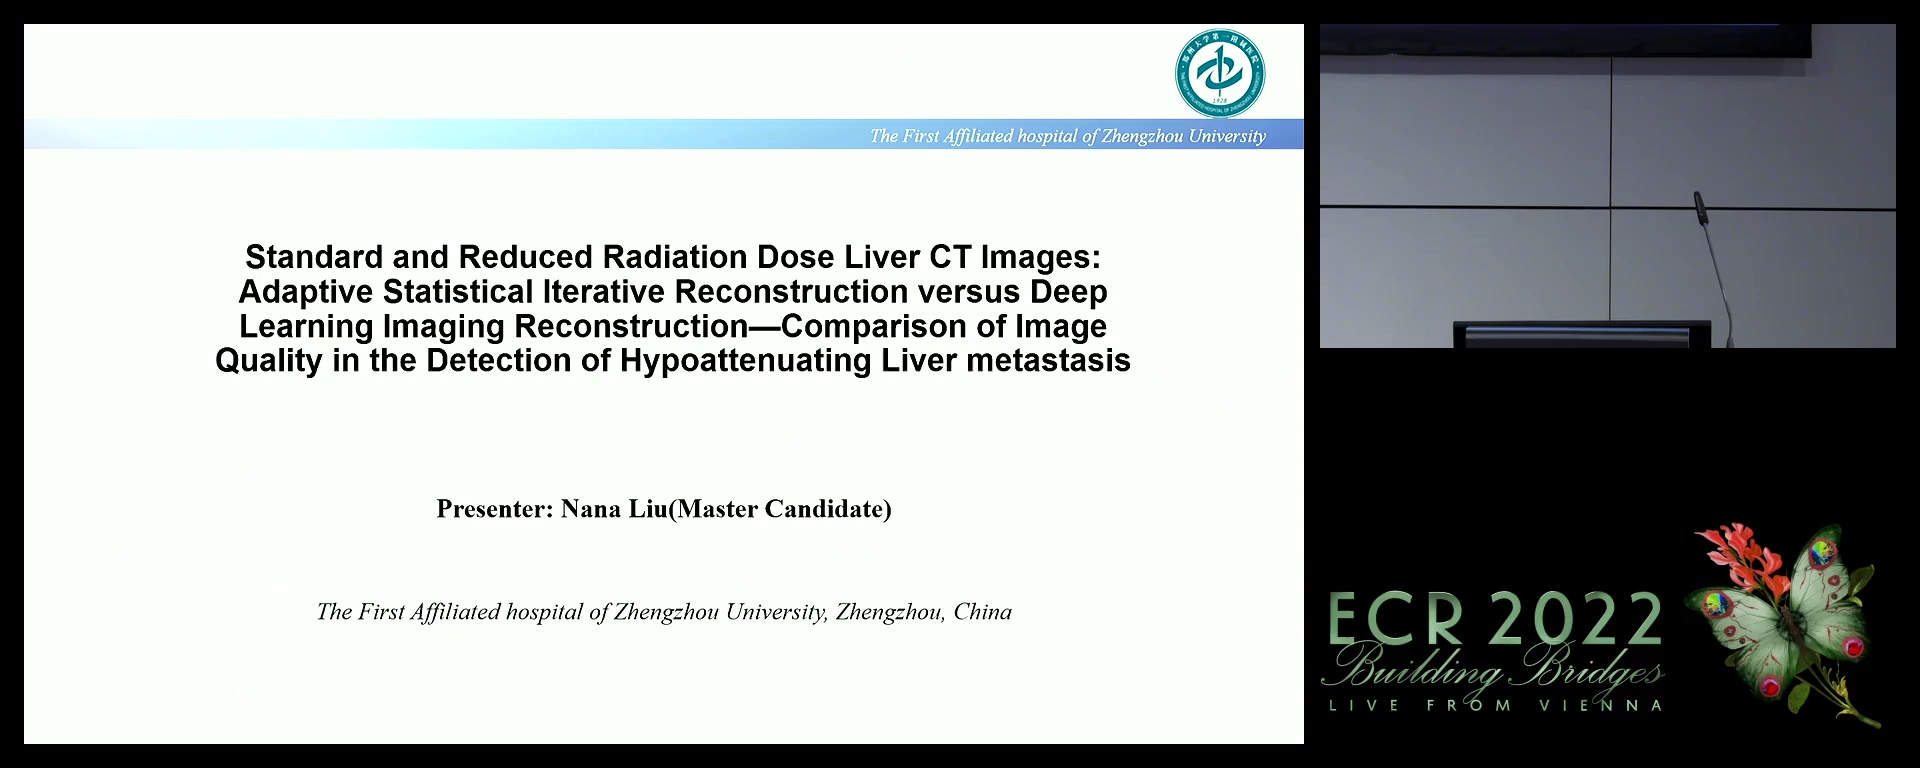 Comparison of iterative reconstruction and deep learning imaging reconstruction in detection of hypoattenuating liver metastasis - Nana Liu, zheng zhou / CN